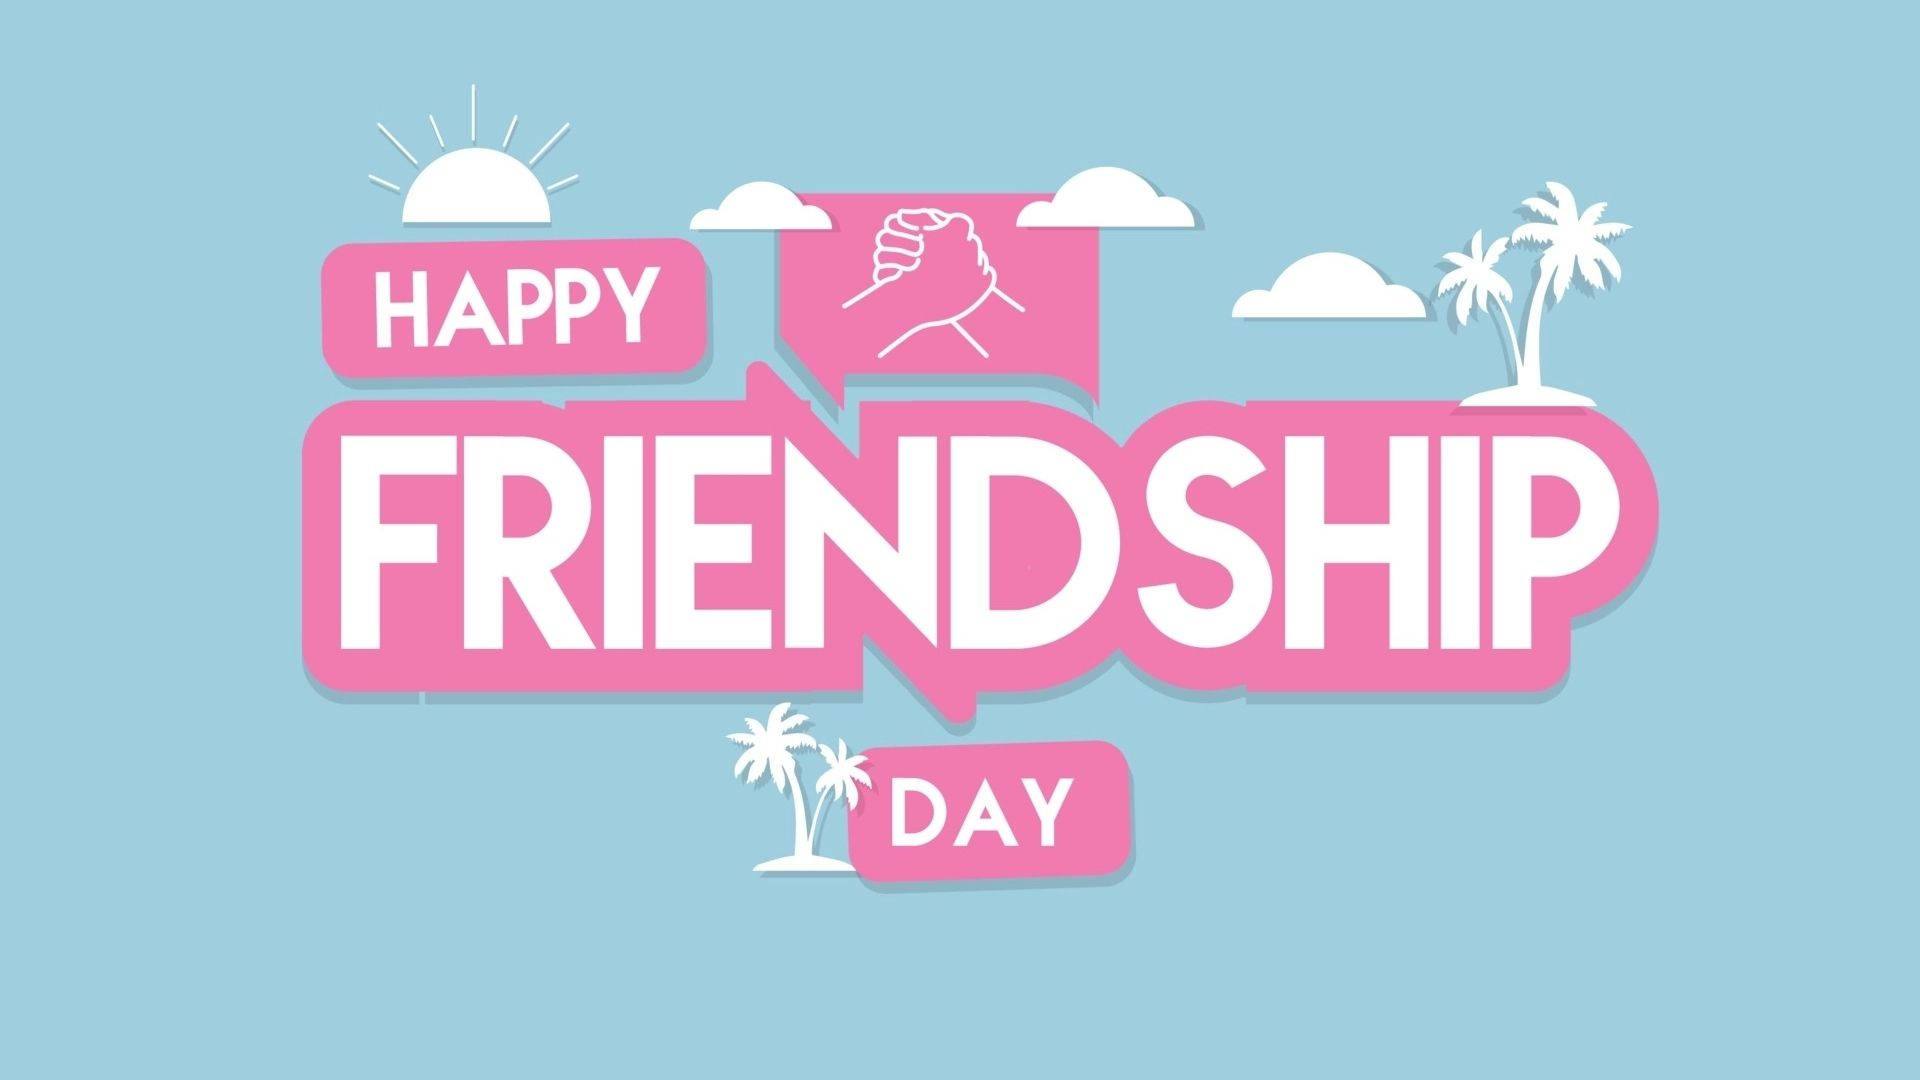 Friendship Day Summer Theme Wallpaper